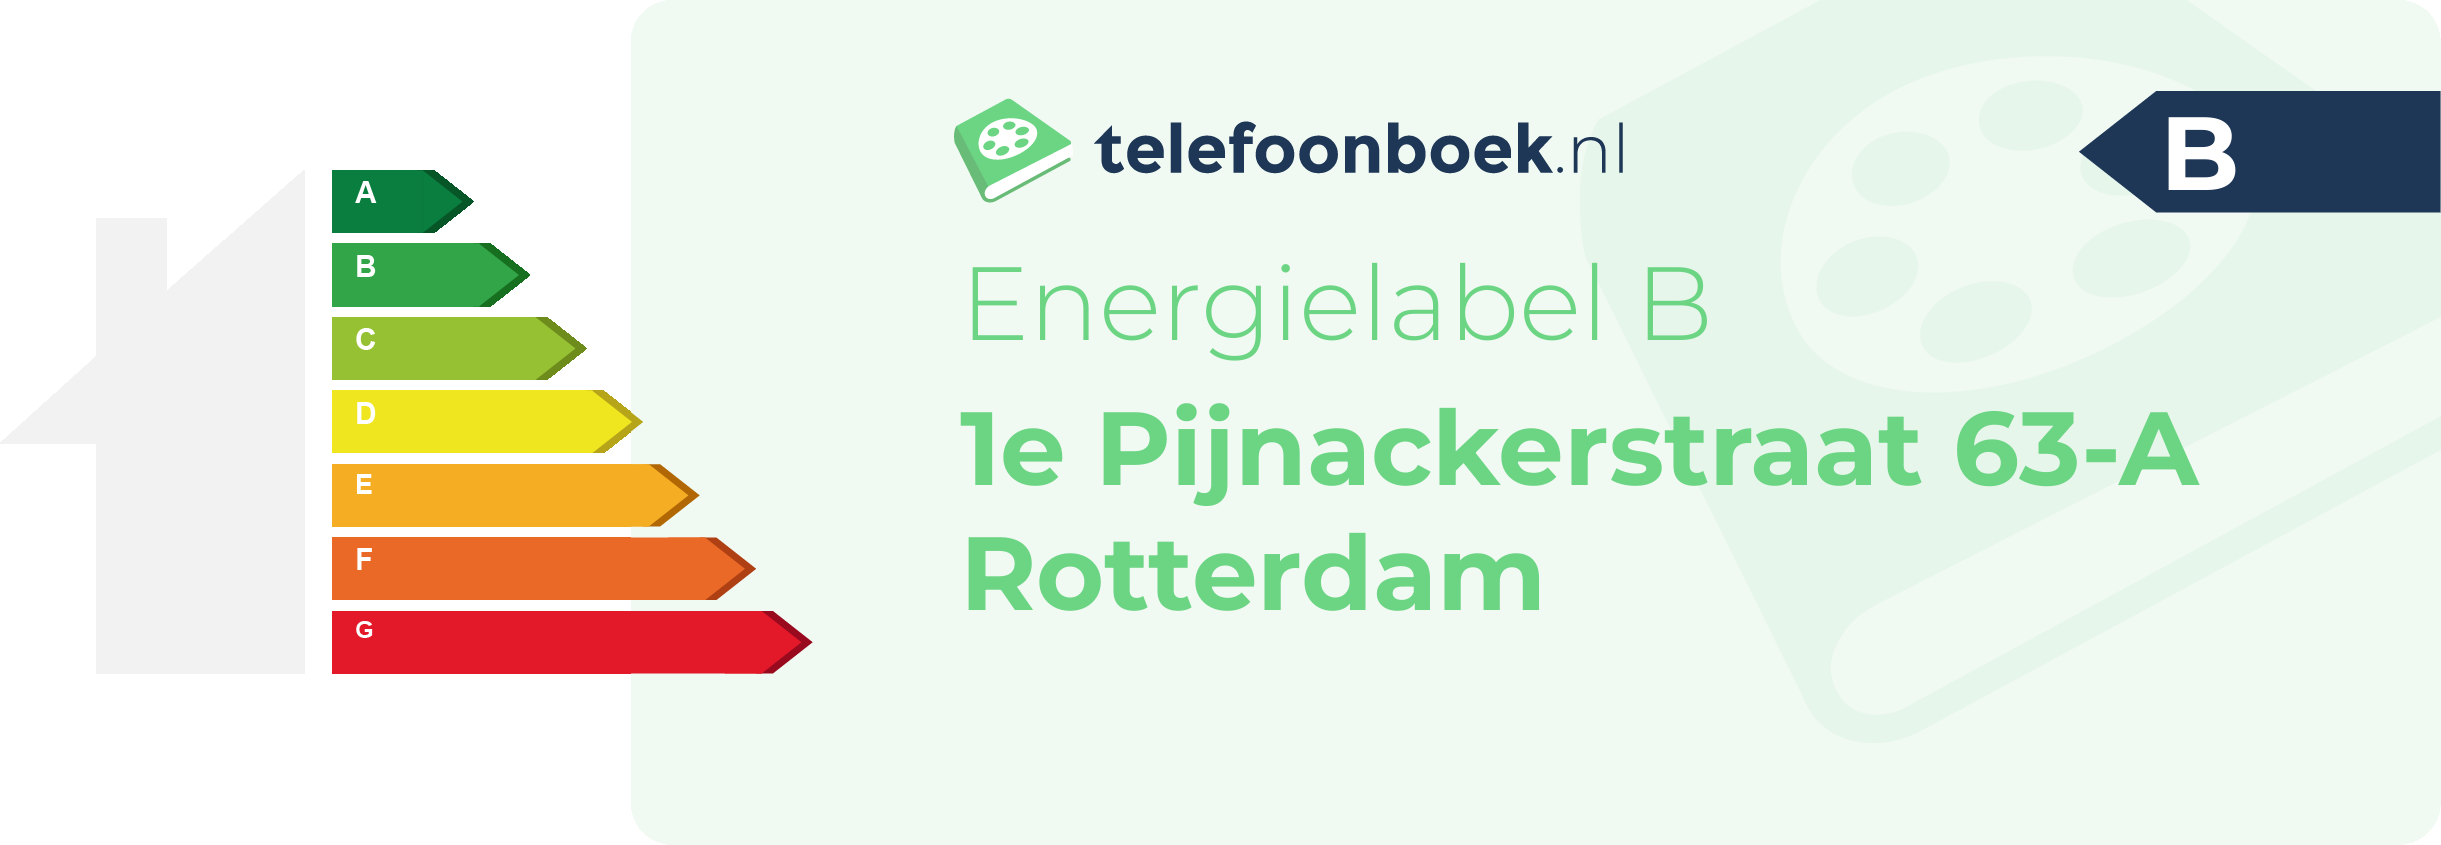 Energielabel 1e Pijnackerstraat 63-A Rotterdam